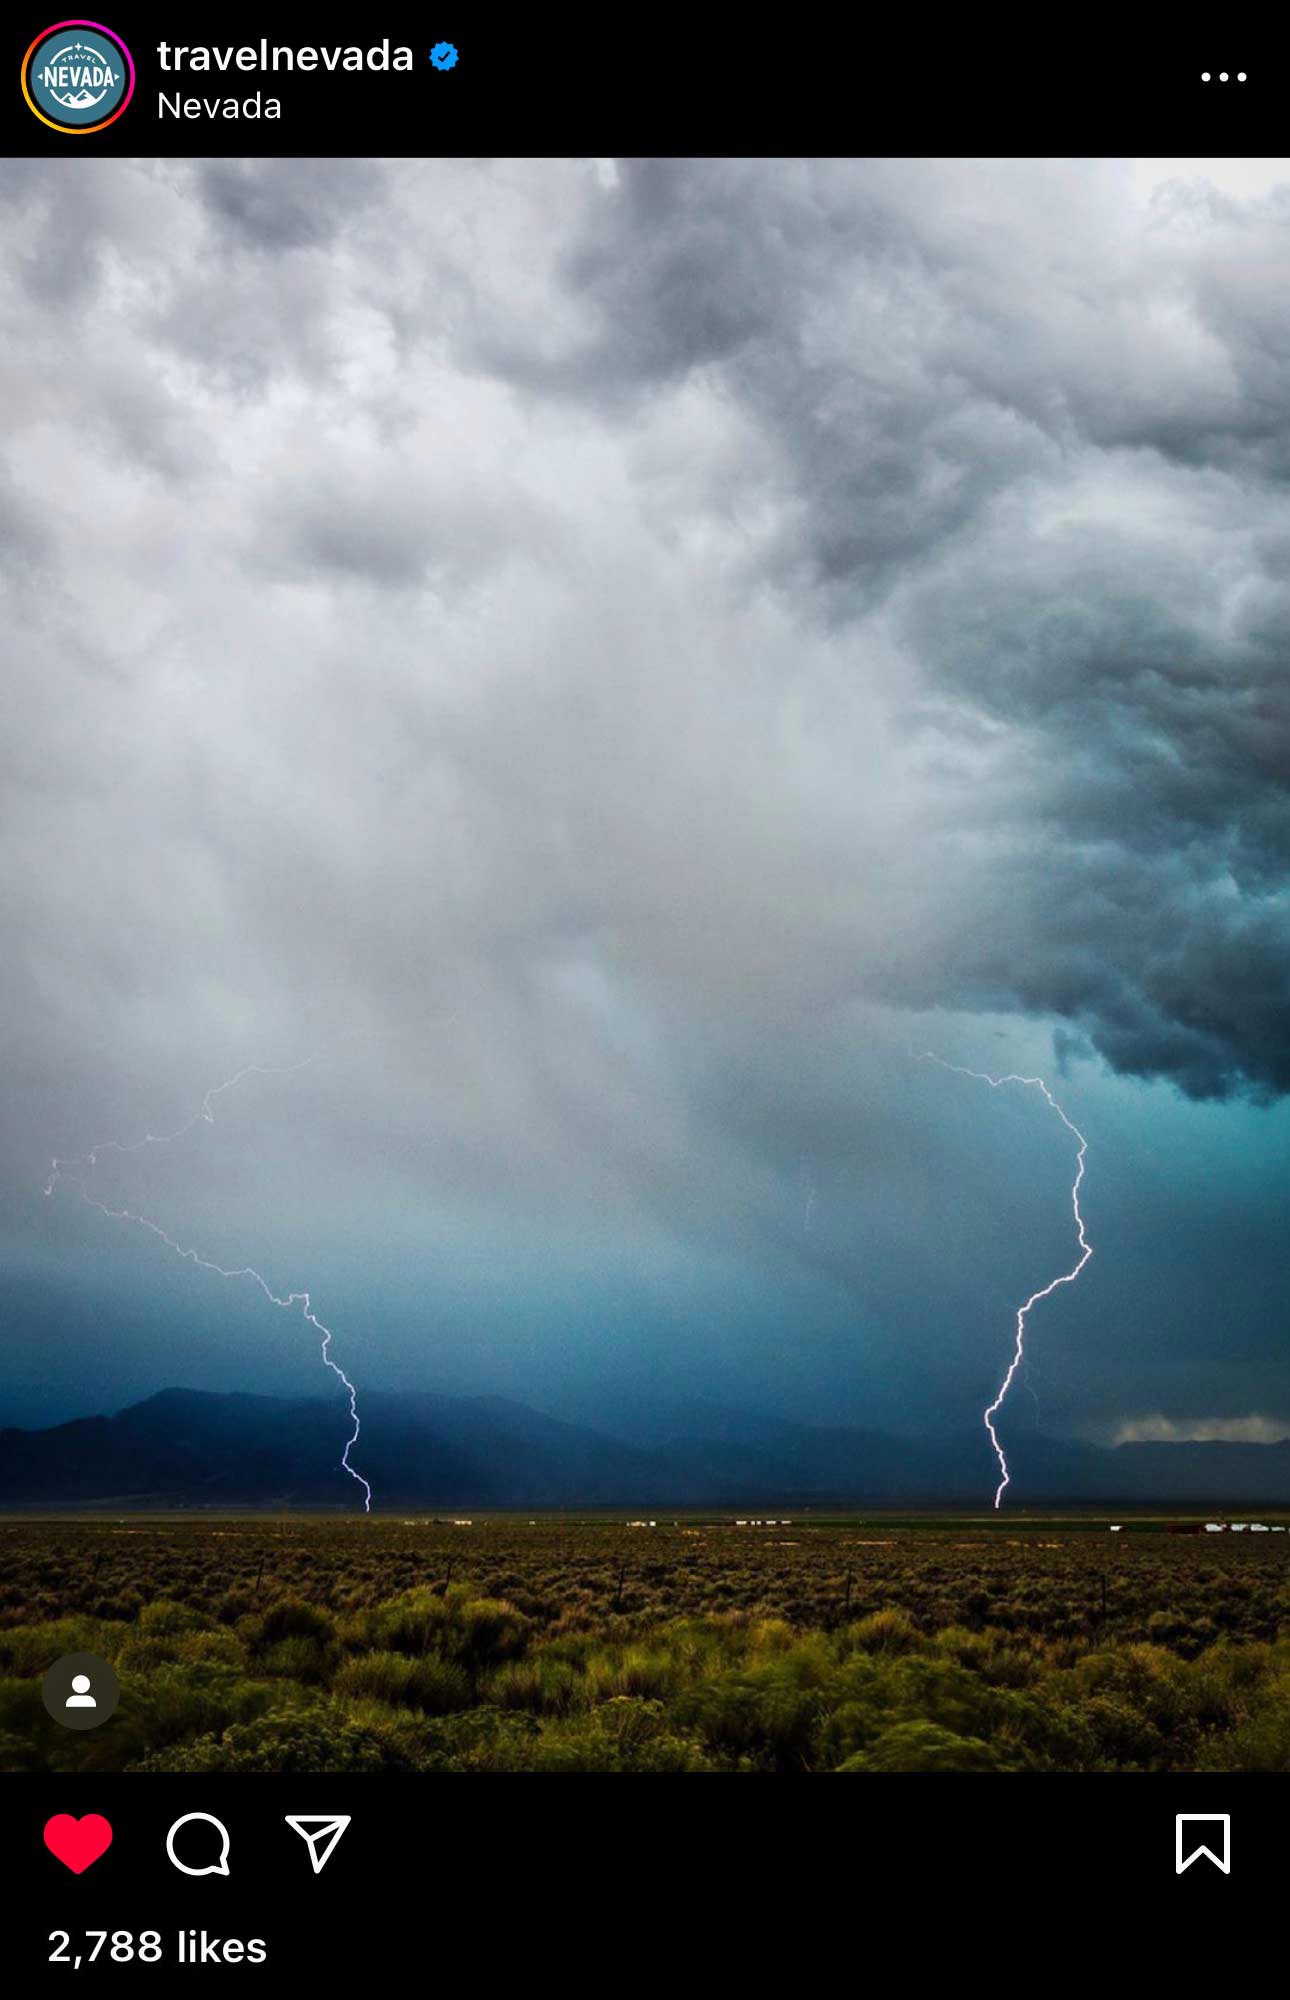 Thunderstorm near Ely, Nevada for Travel Nevada on Instagram.